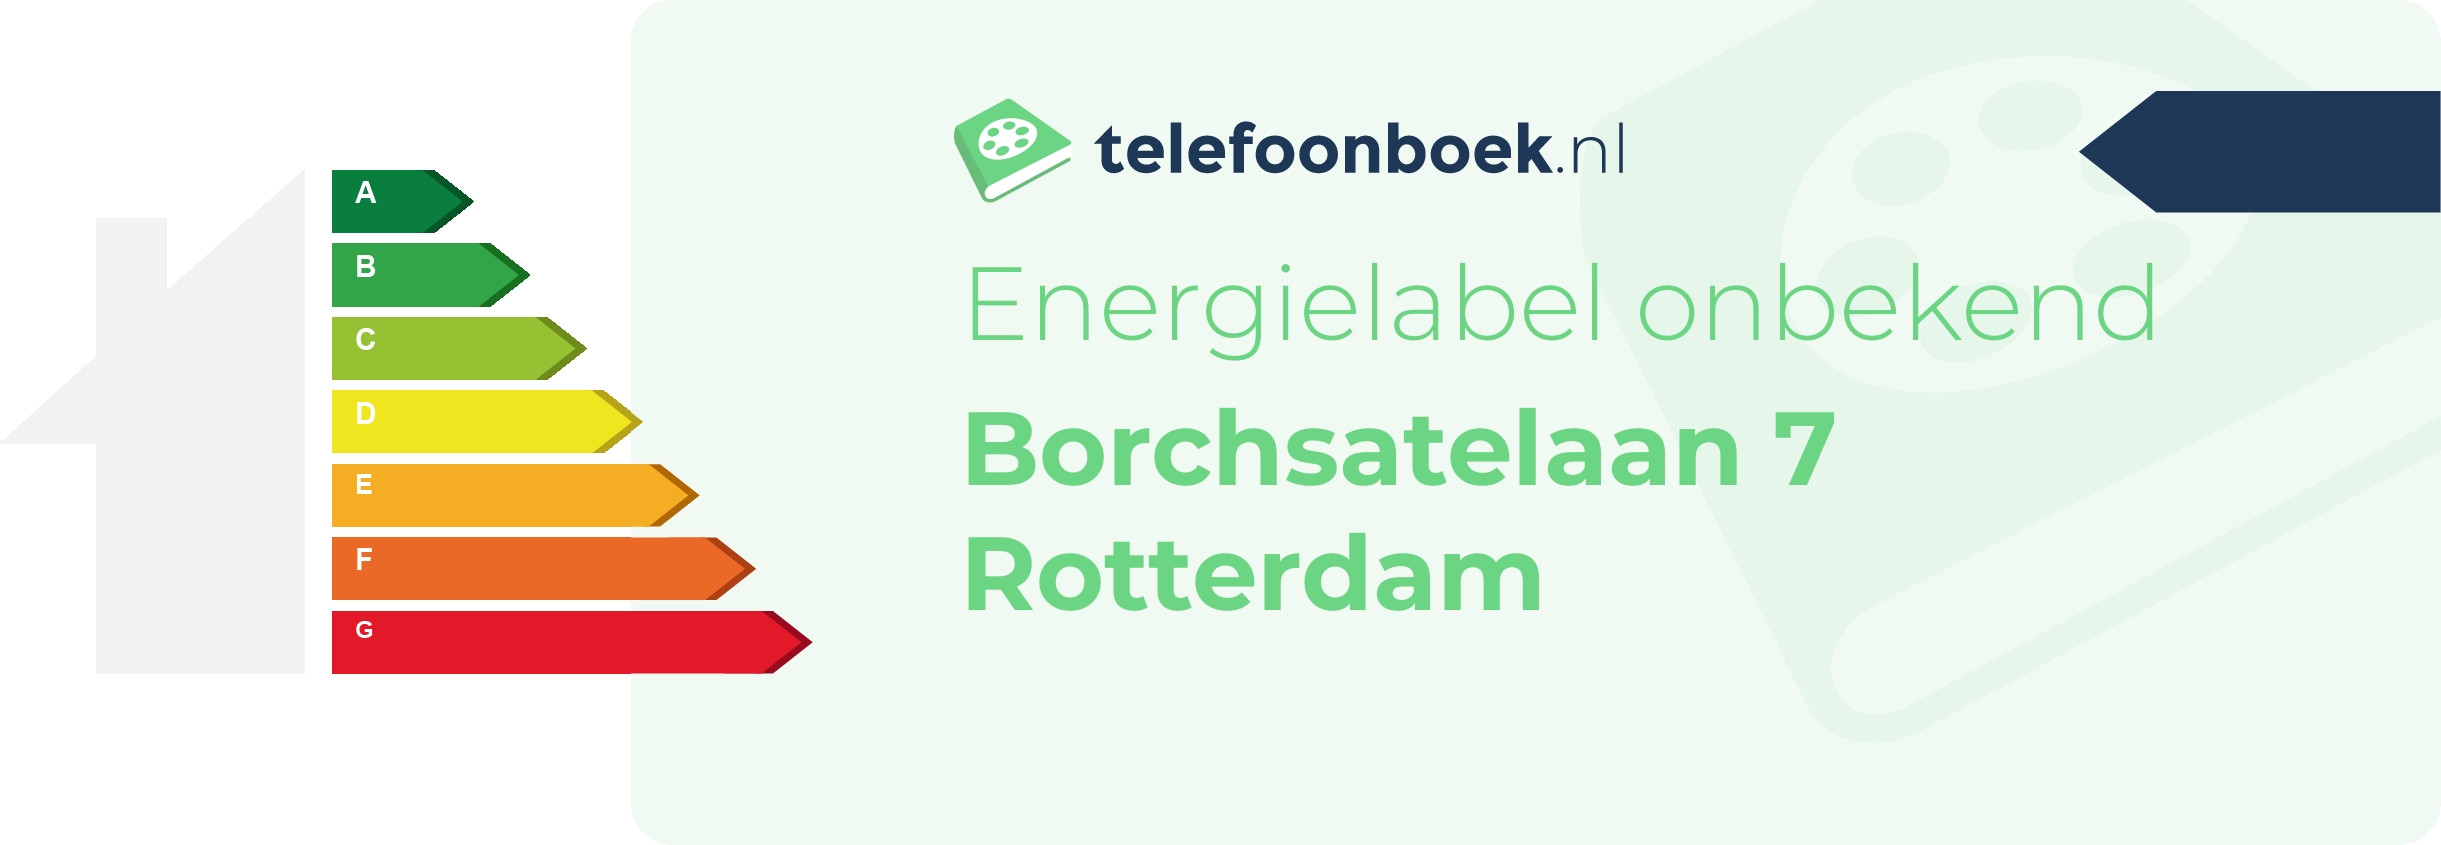 Energielabel Borchsatelaan 7 Rotterdam